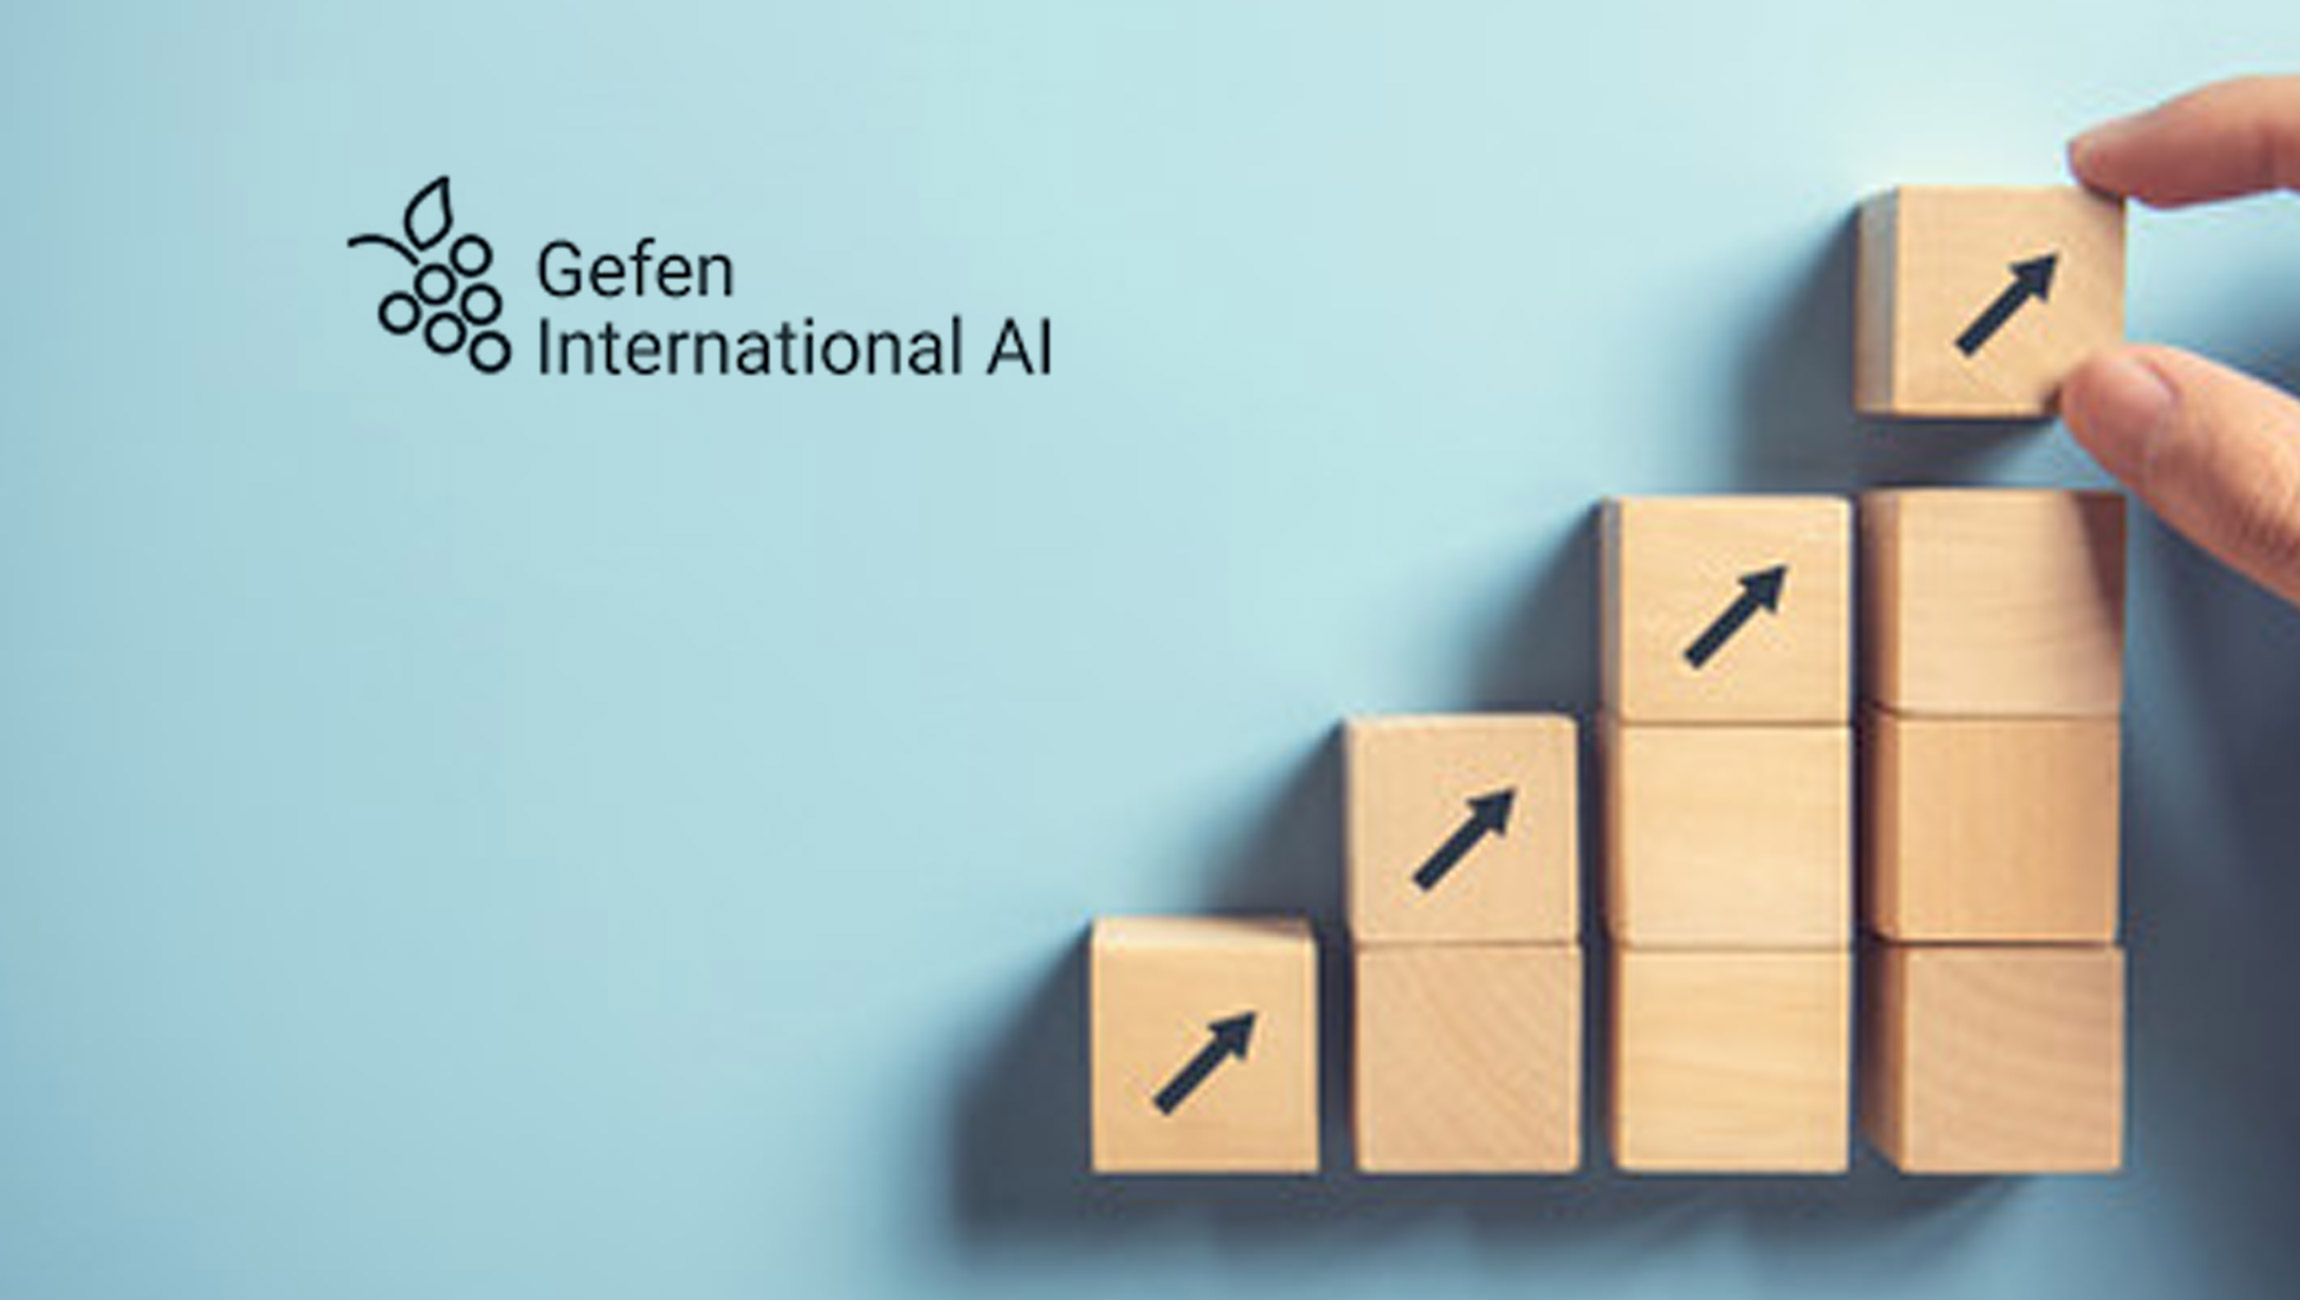 Gefen-International-AI-Progresses-Growth-Strategy-in-December-Quarter